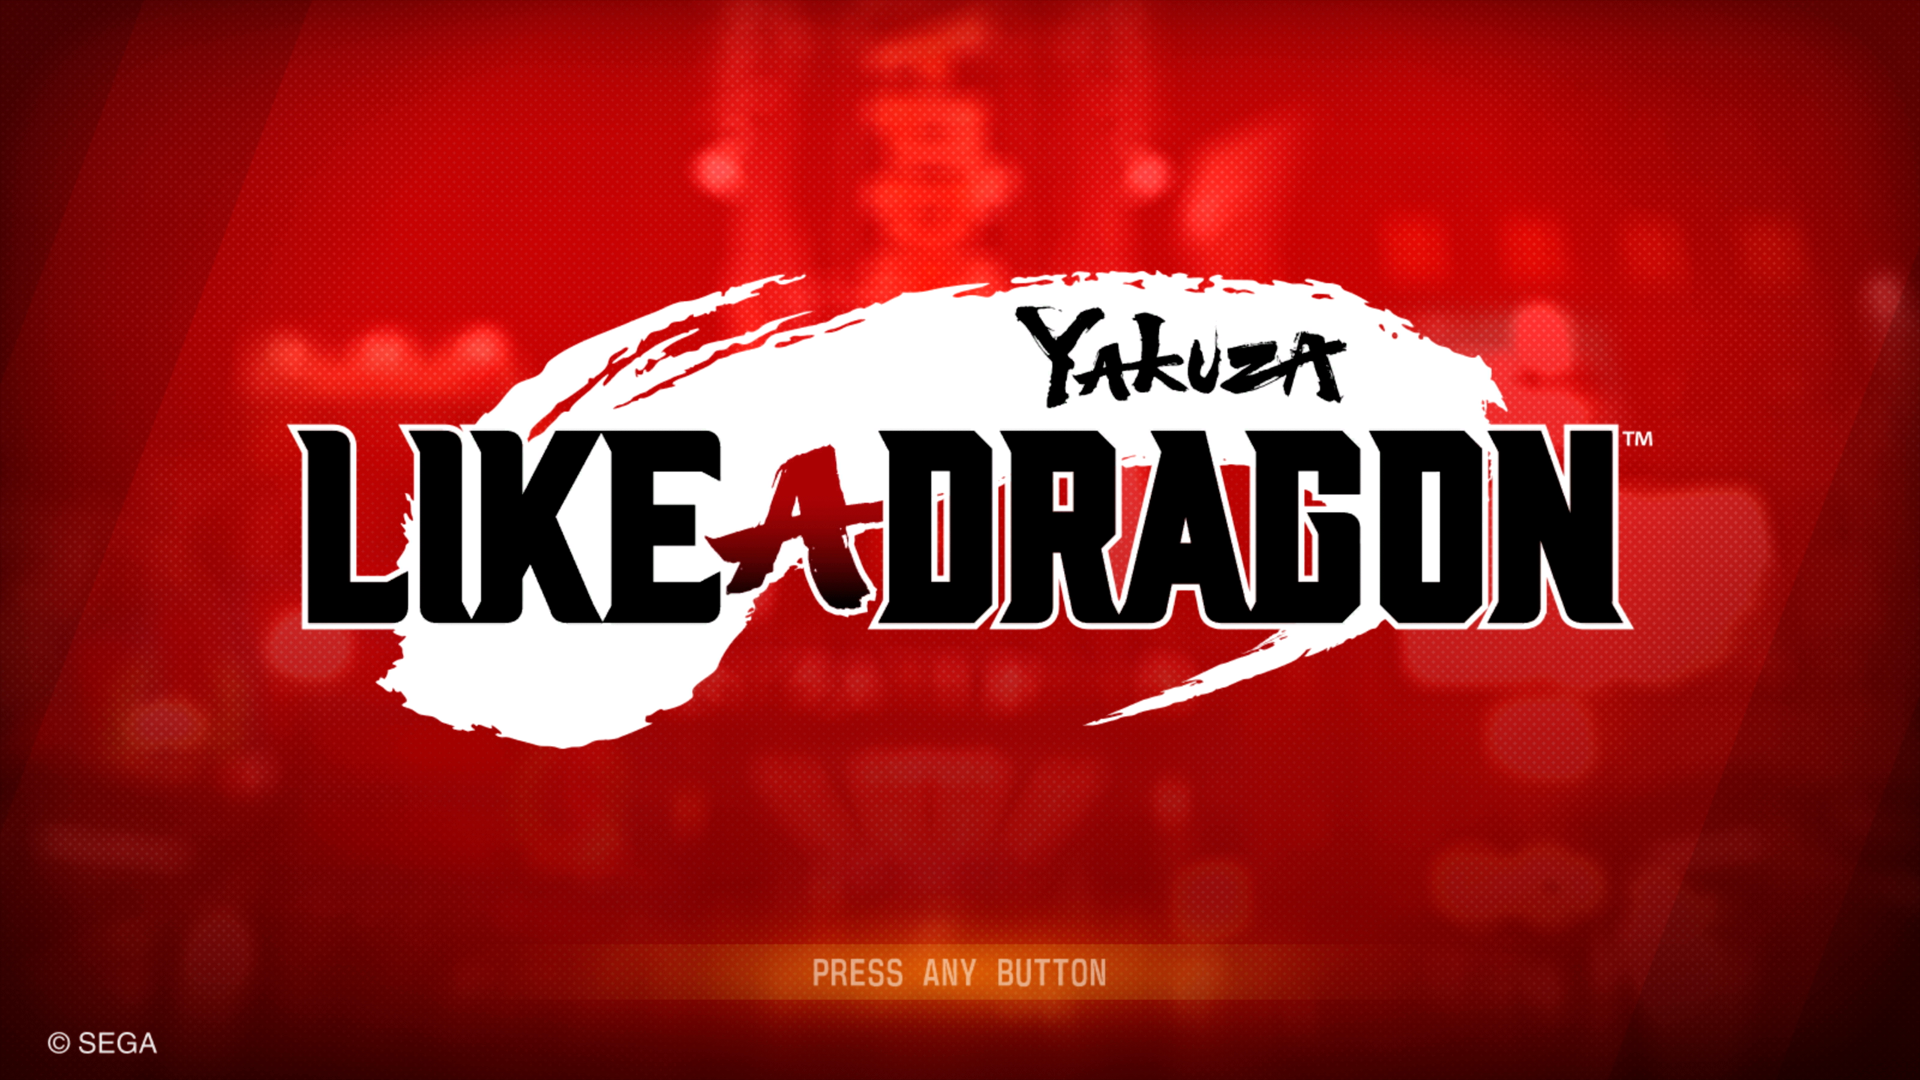 Exploring the history of the Yakuza and Like a Dragon series